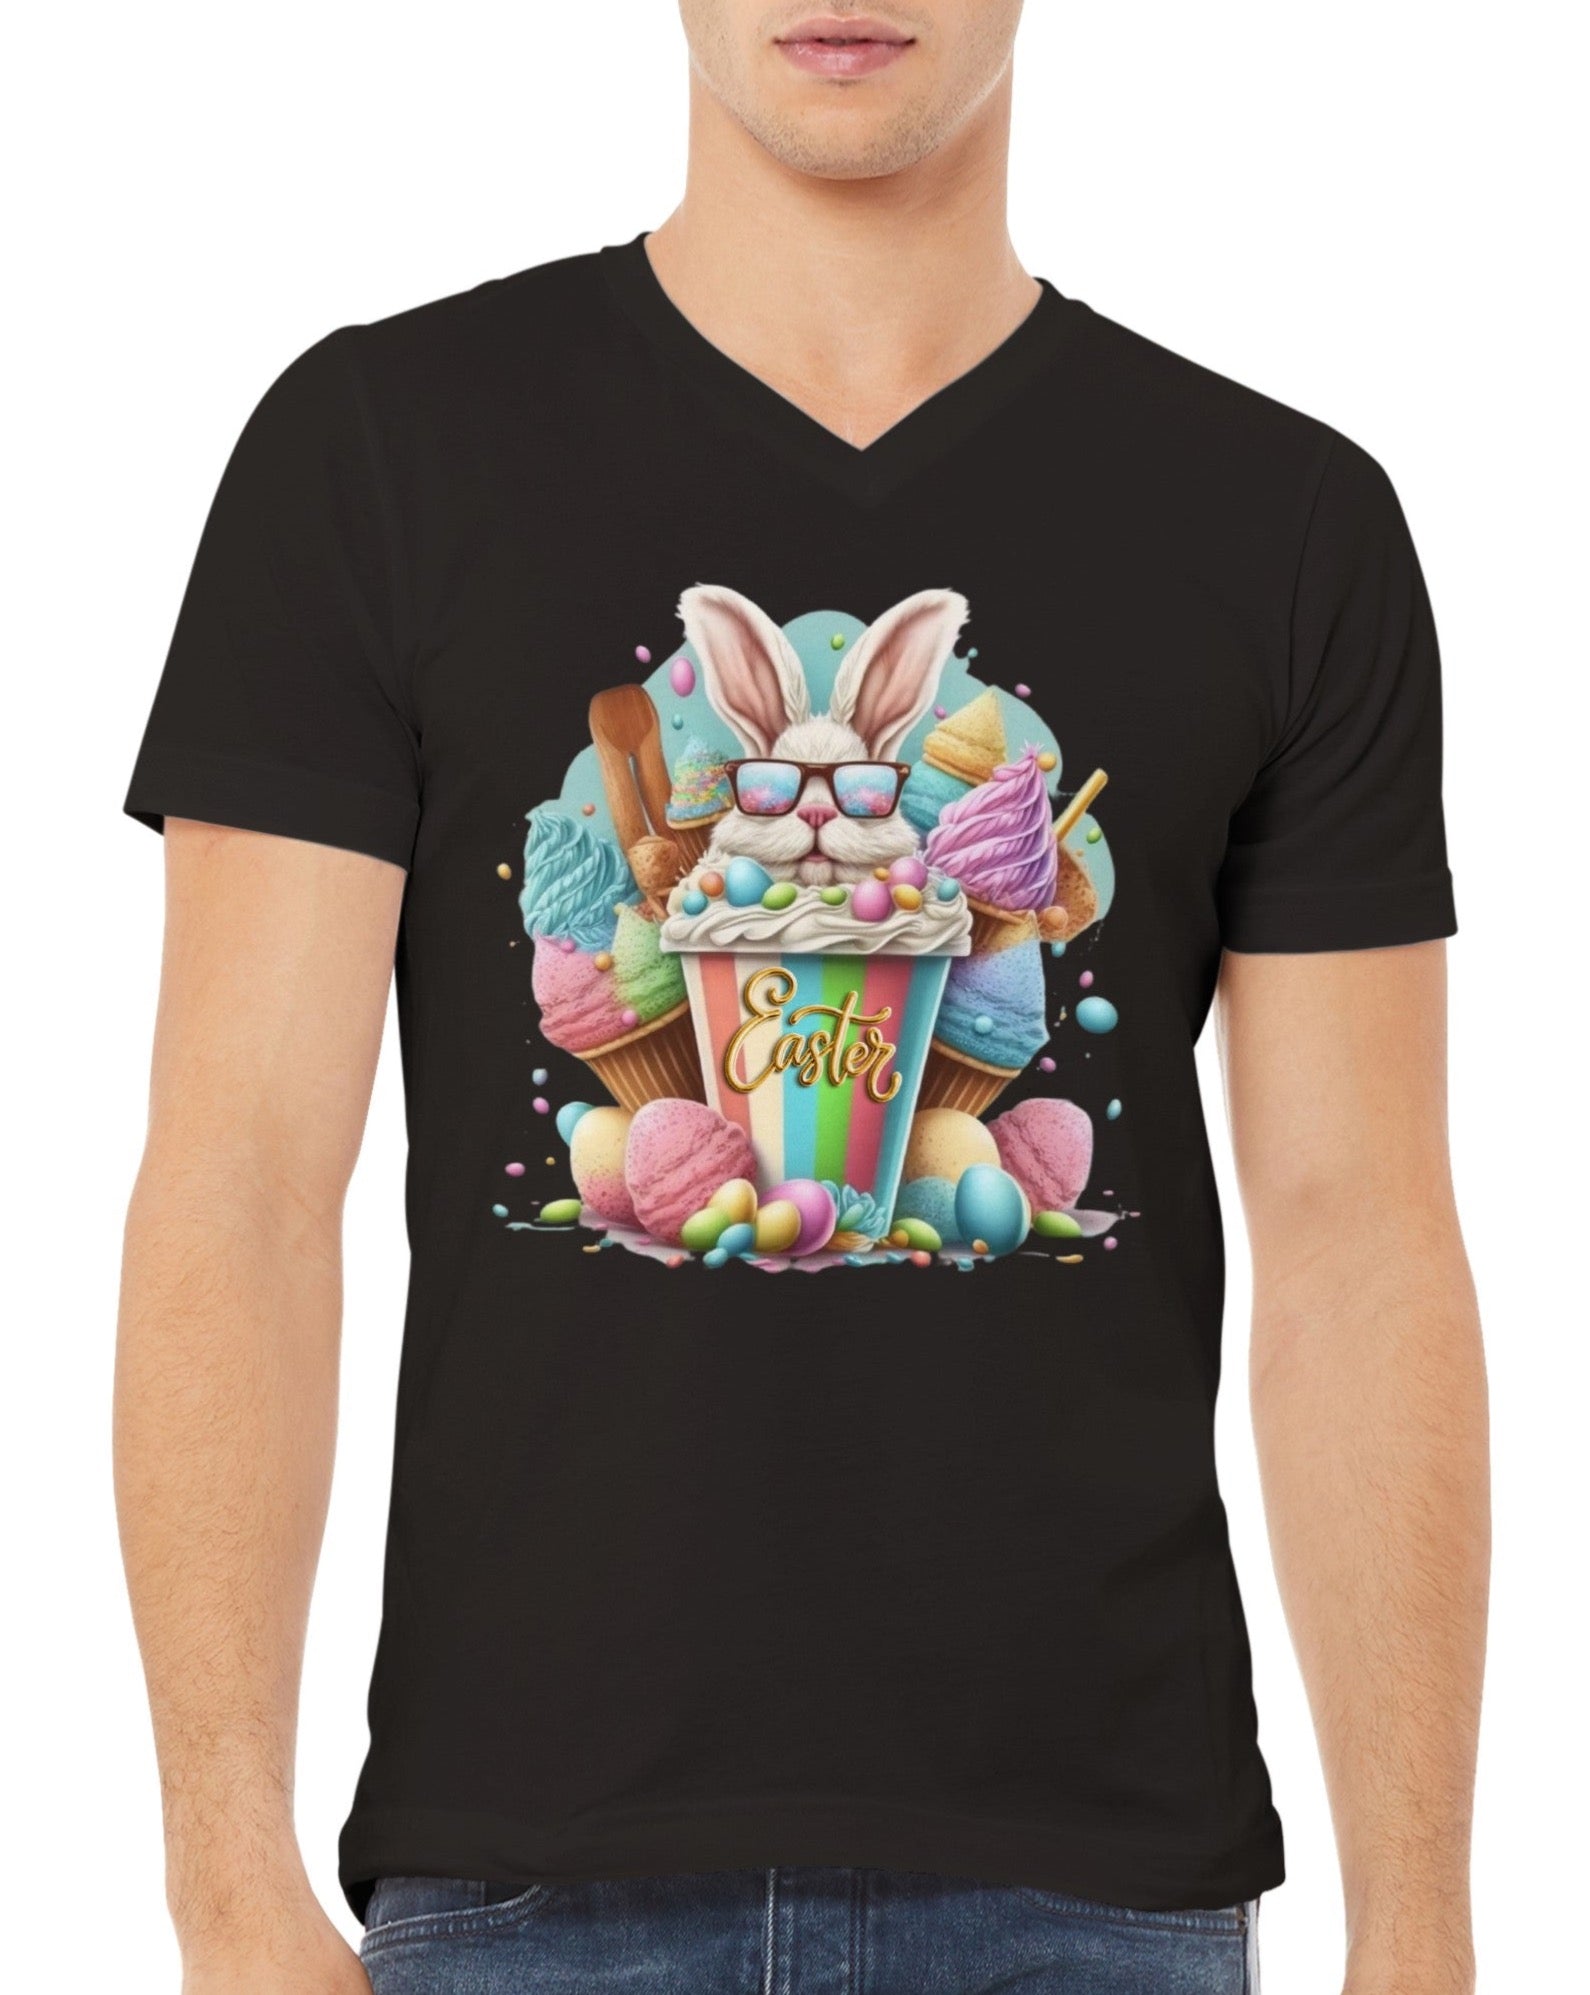 Easter bunny art T shirt